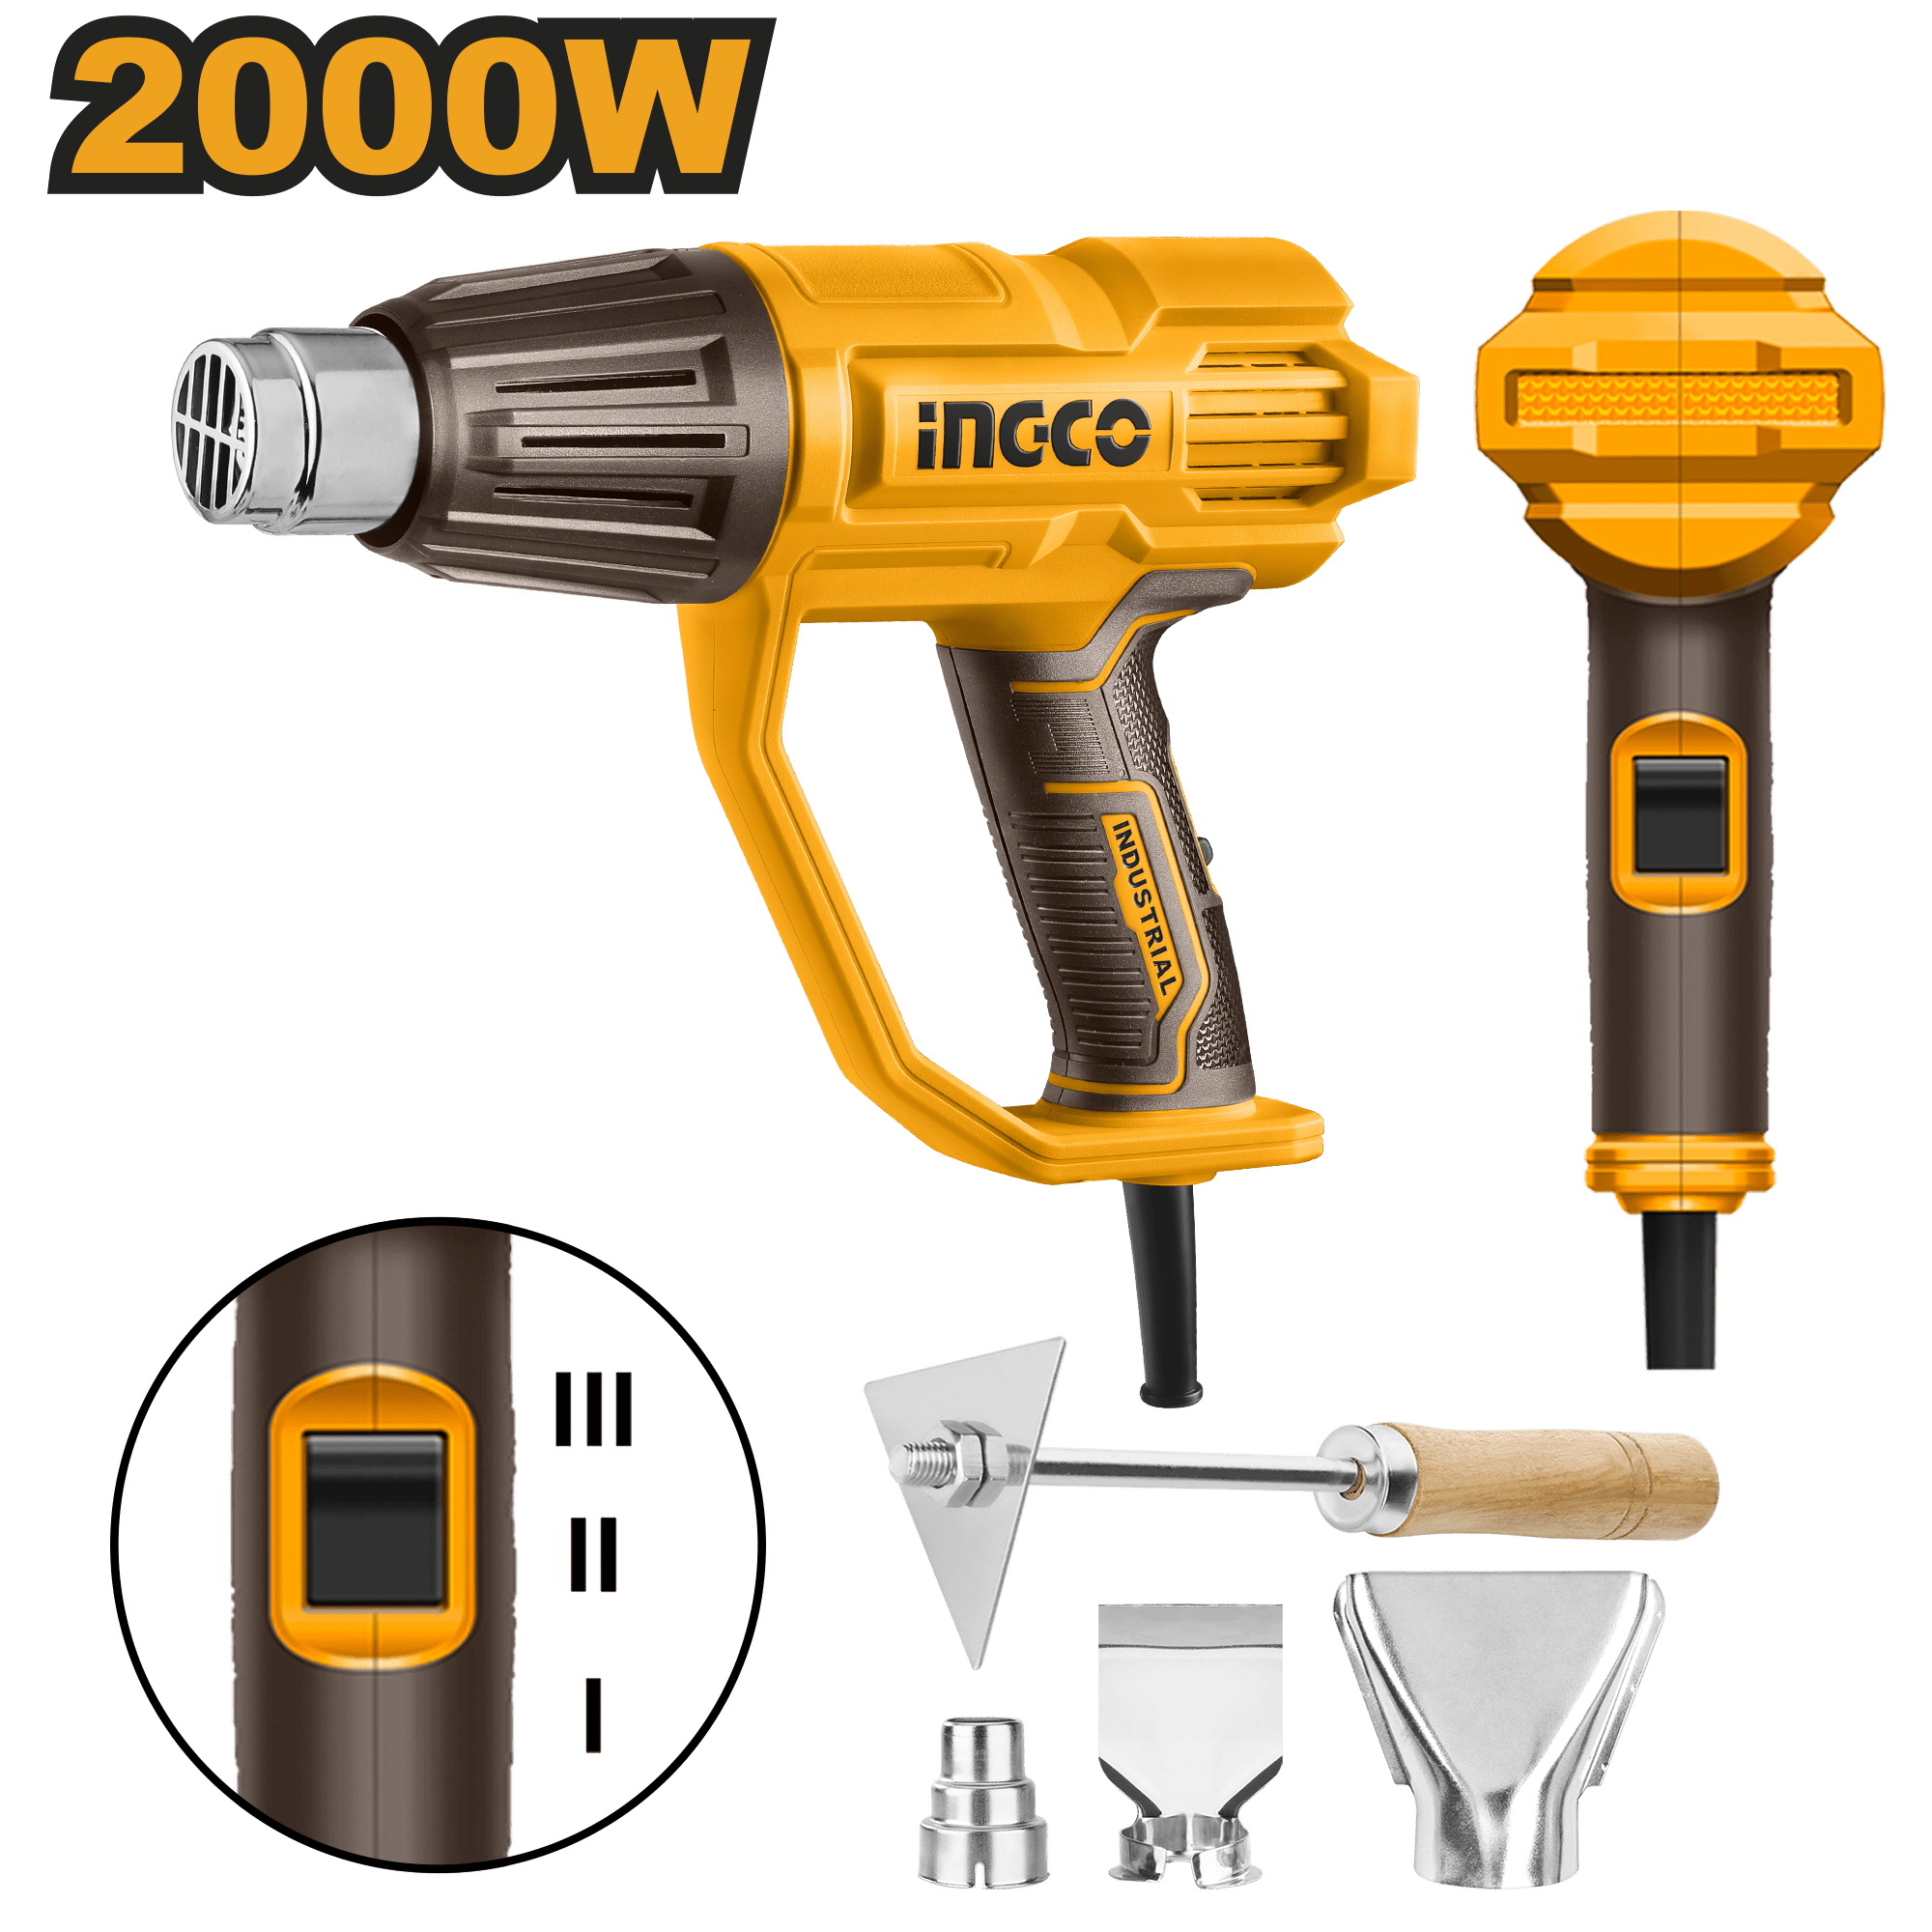 Ingco Heat Gun 2000W - HG20008 - Buy Online in Accra, Ghana at Supply Master Heat Gun Buy Tools hardware Building materials